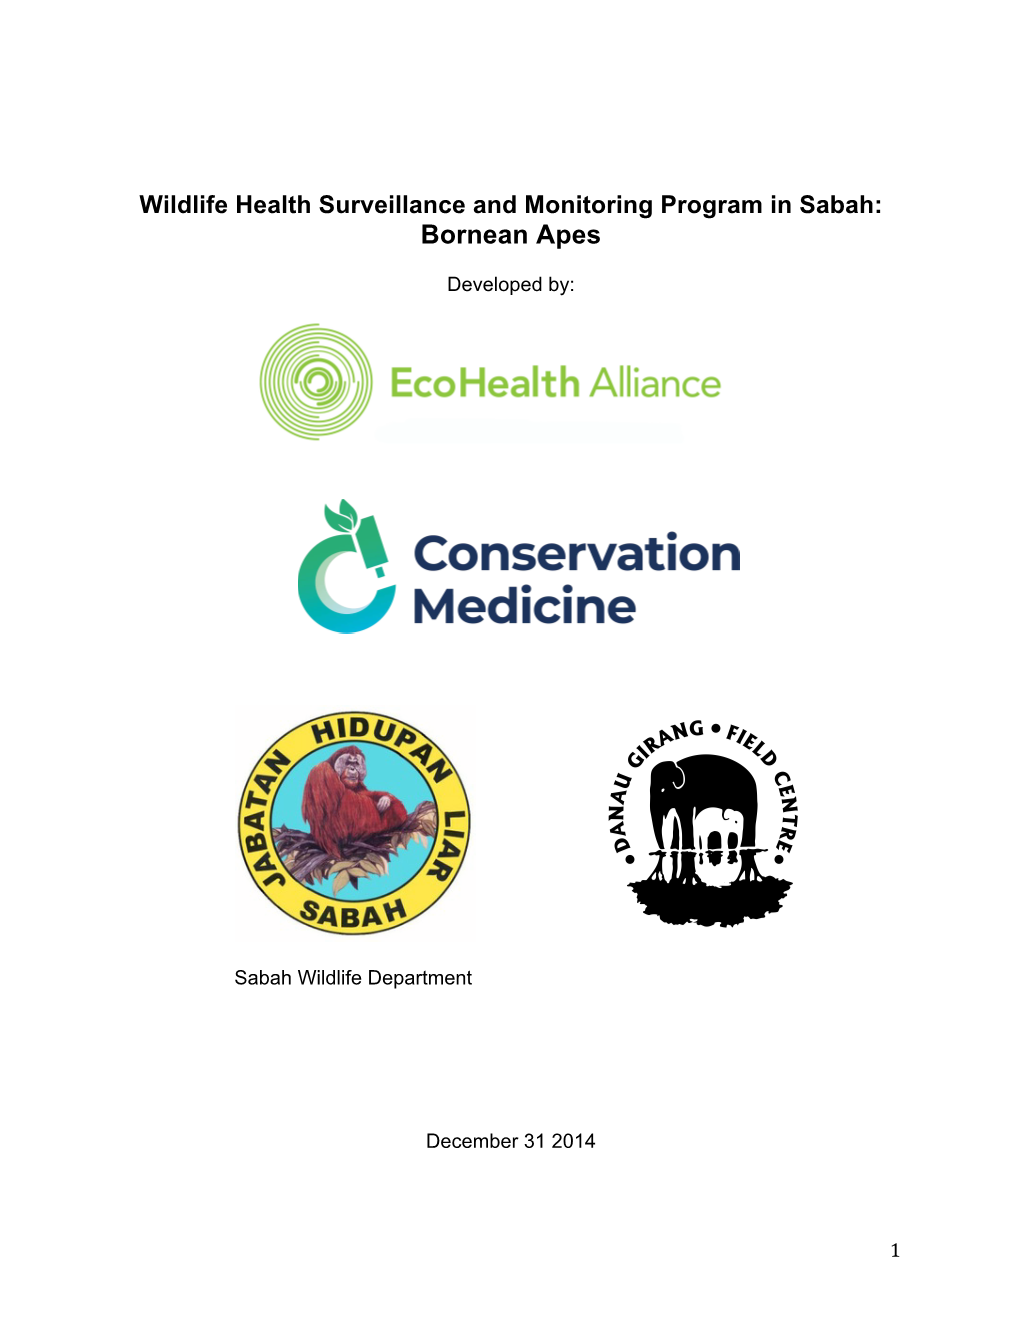 Wildlife Health Surveillance and Monitoring Program in Sabah: Bornean Apes